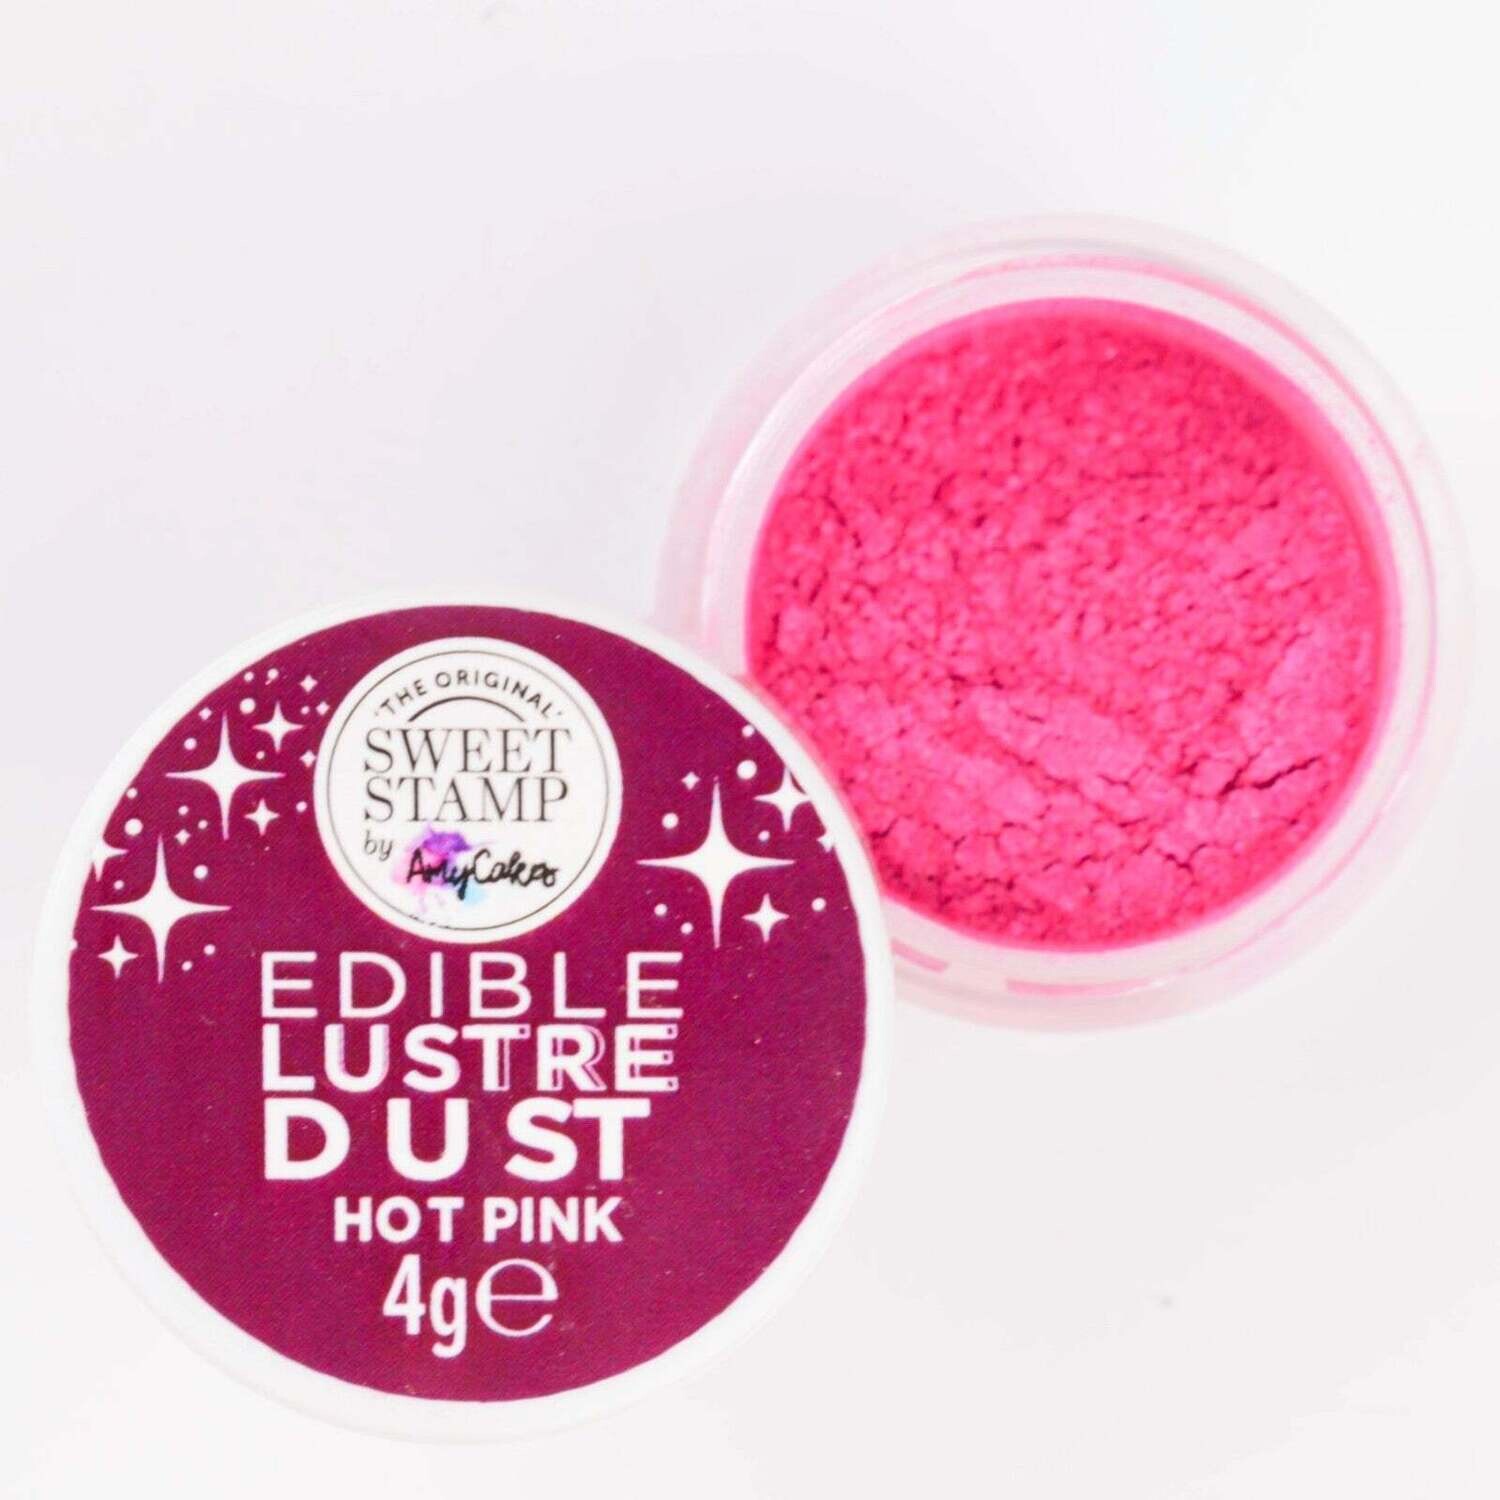 Sweet Stamp Edible Lustre Dust -HOT PINK - Βρώσιμη σκόνη γυαλιστερή Φούξια 4g